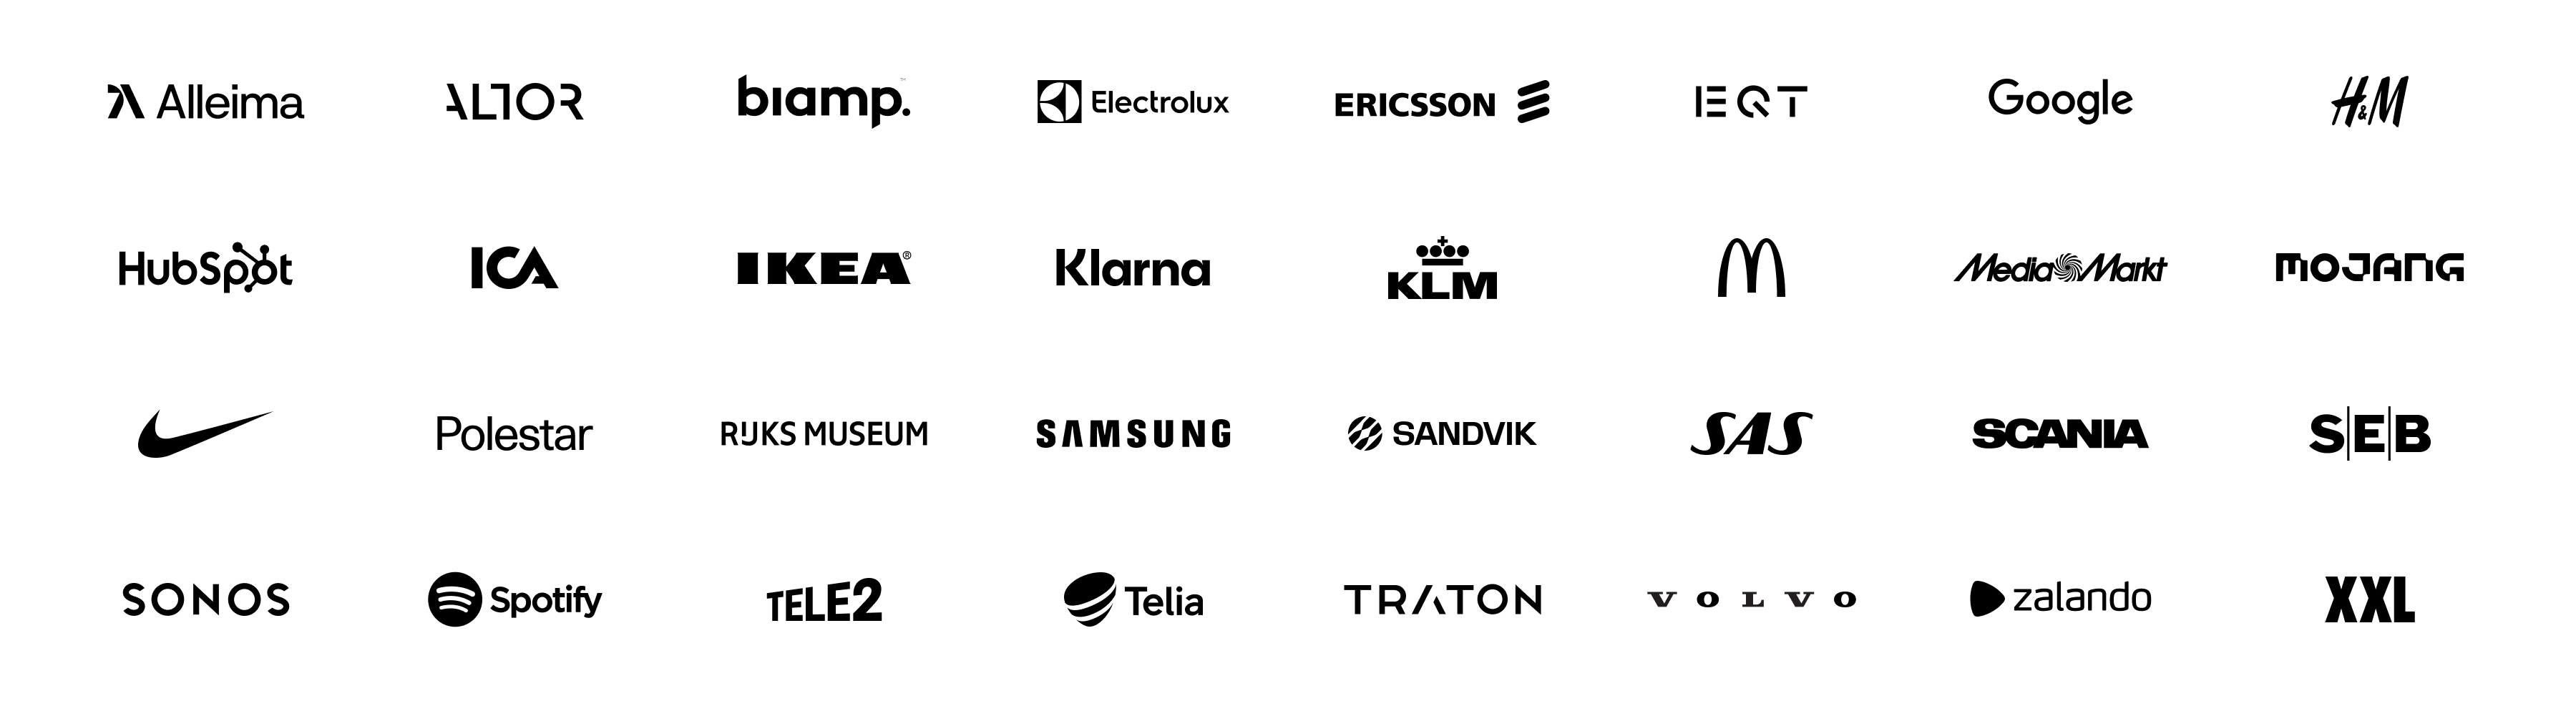 Grid of made up company logos